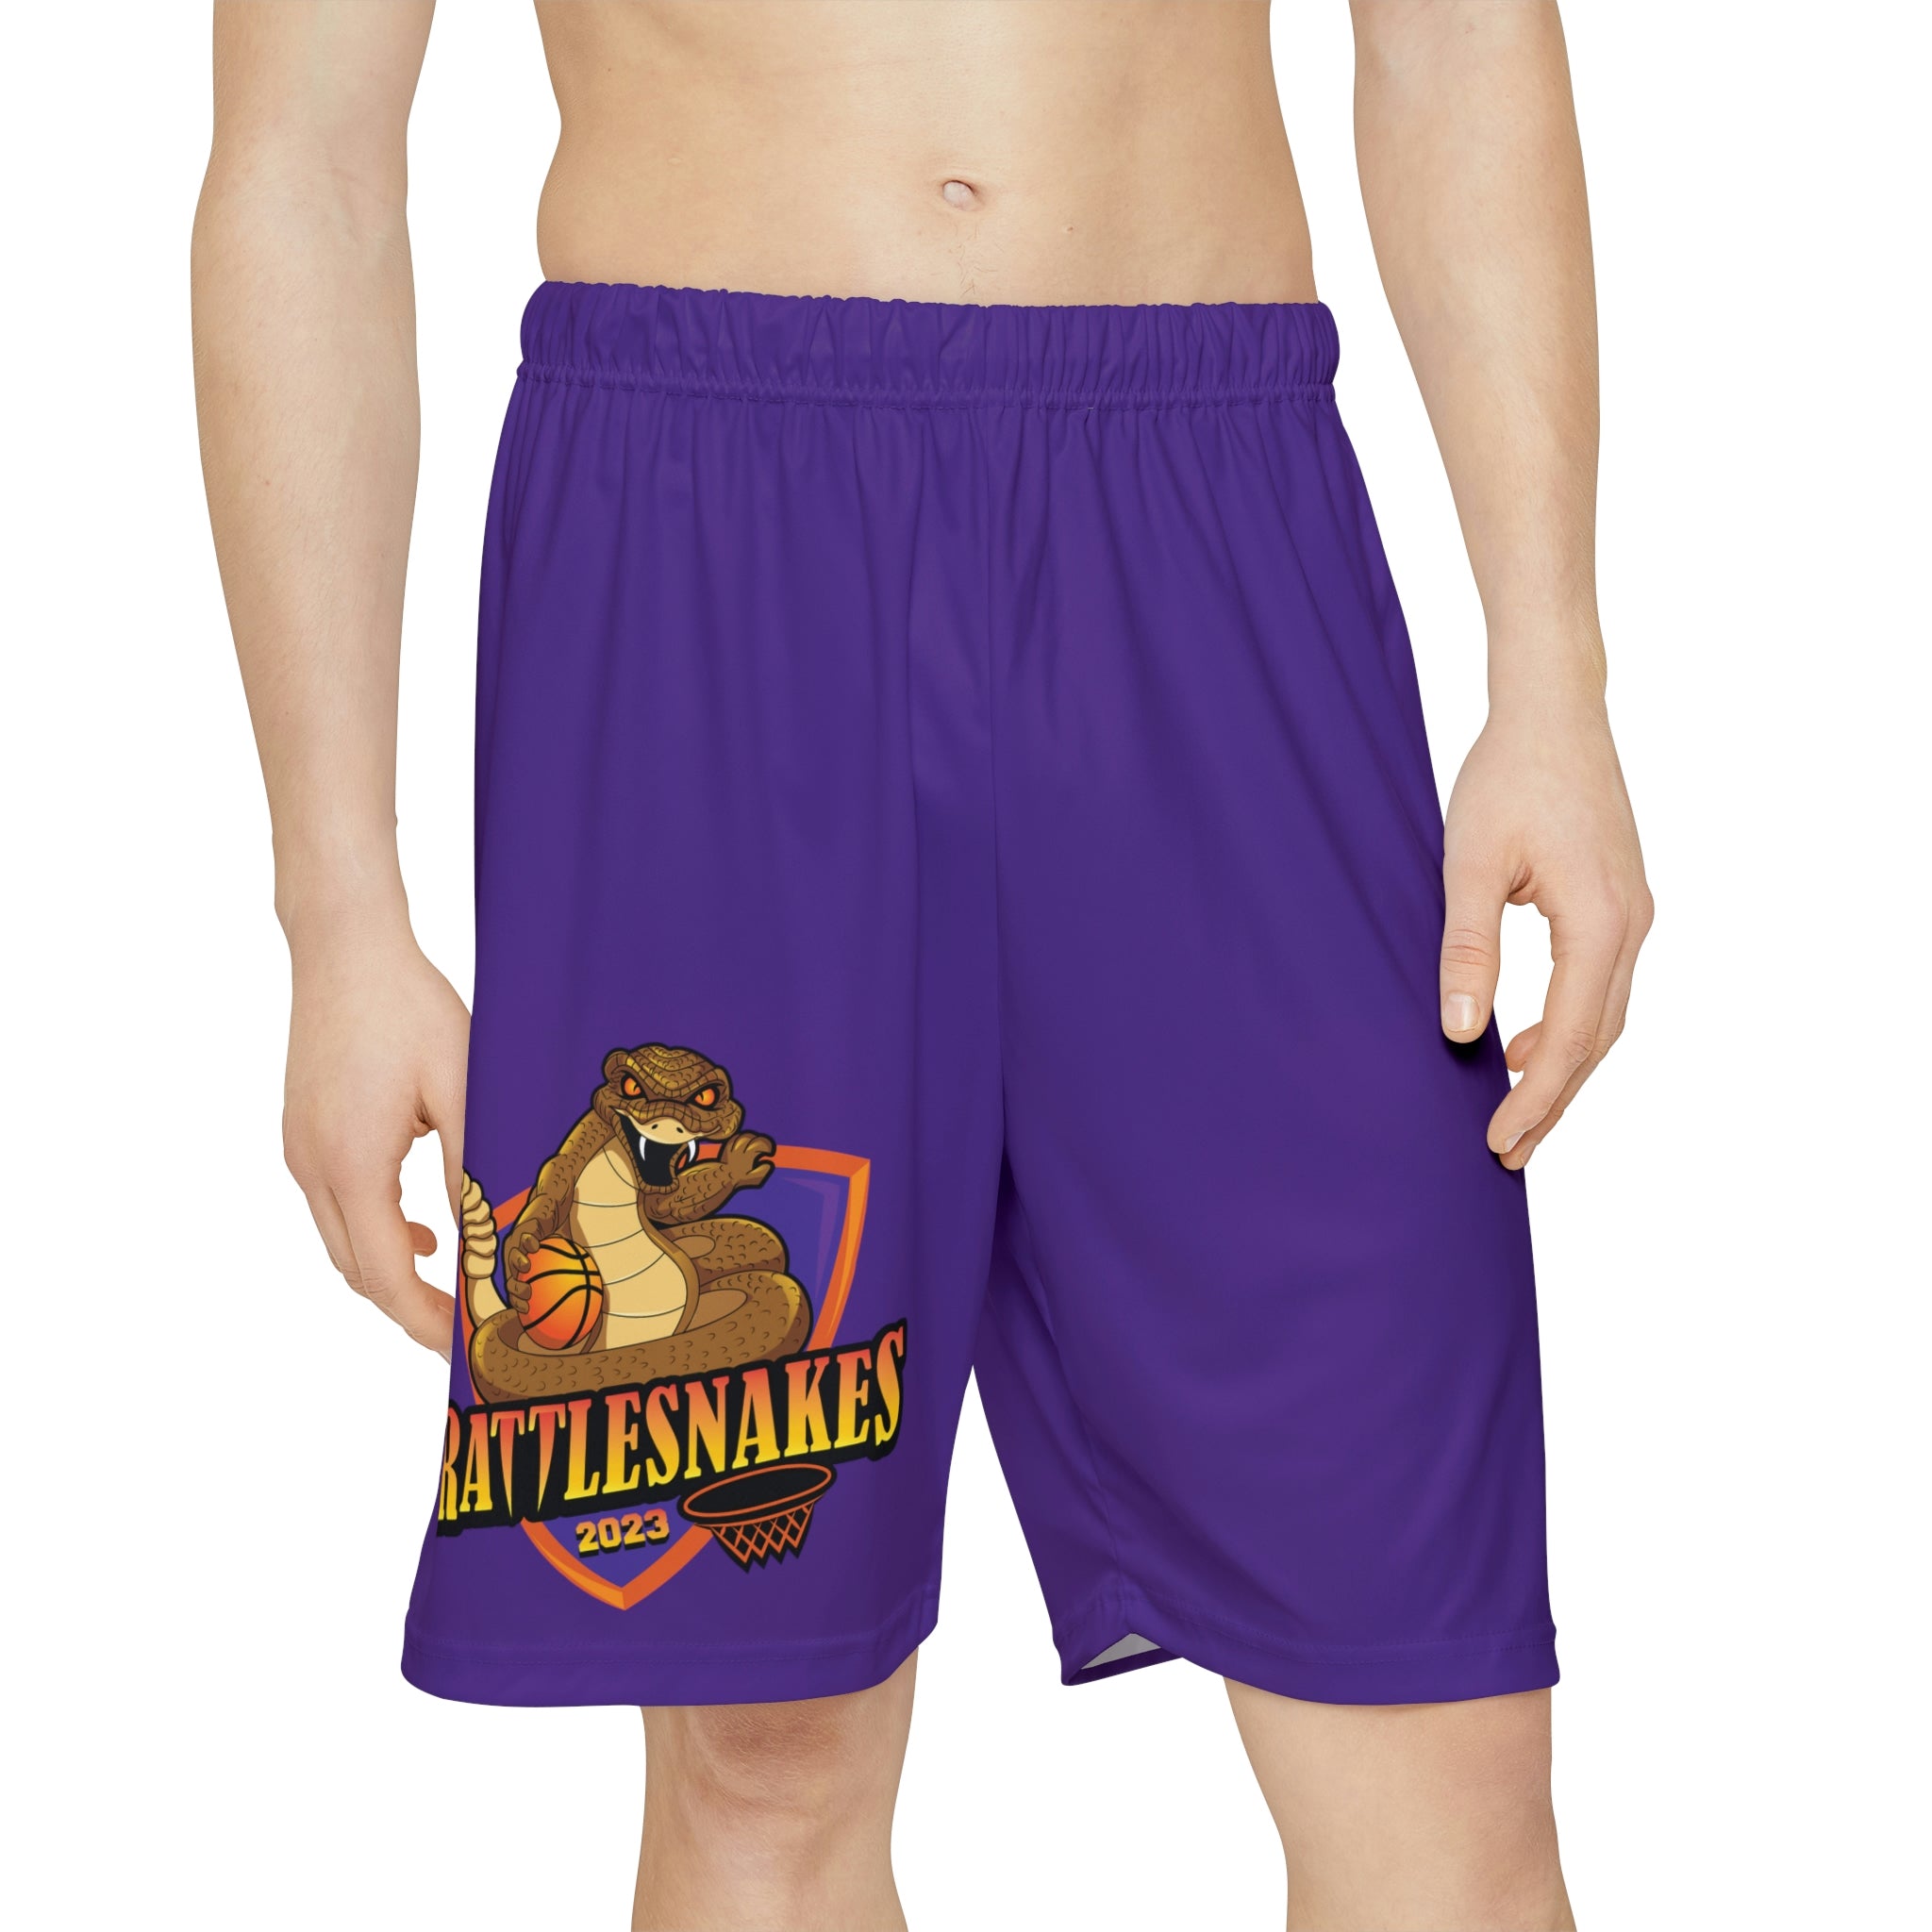 Rattlesnakes Men’s Sports Shorts (AOP) Purple